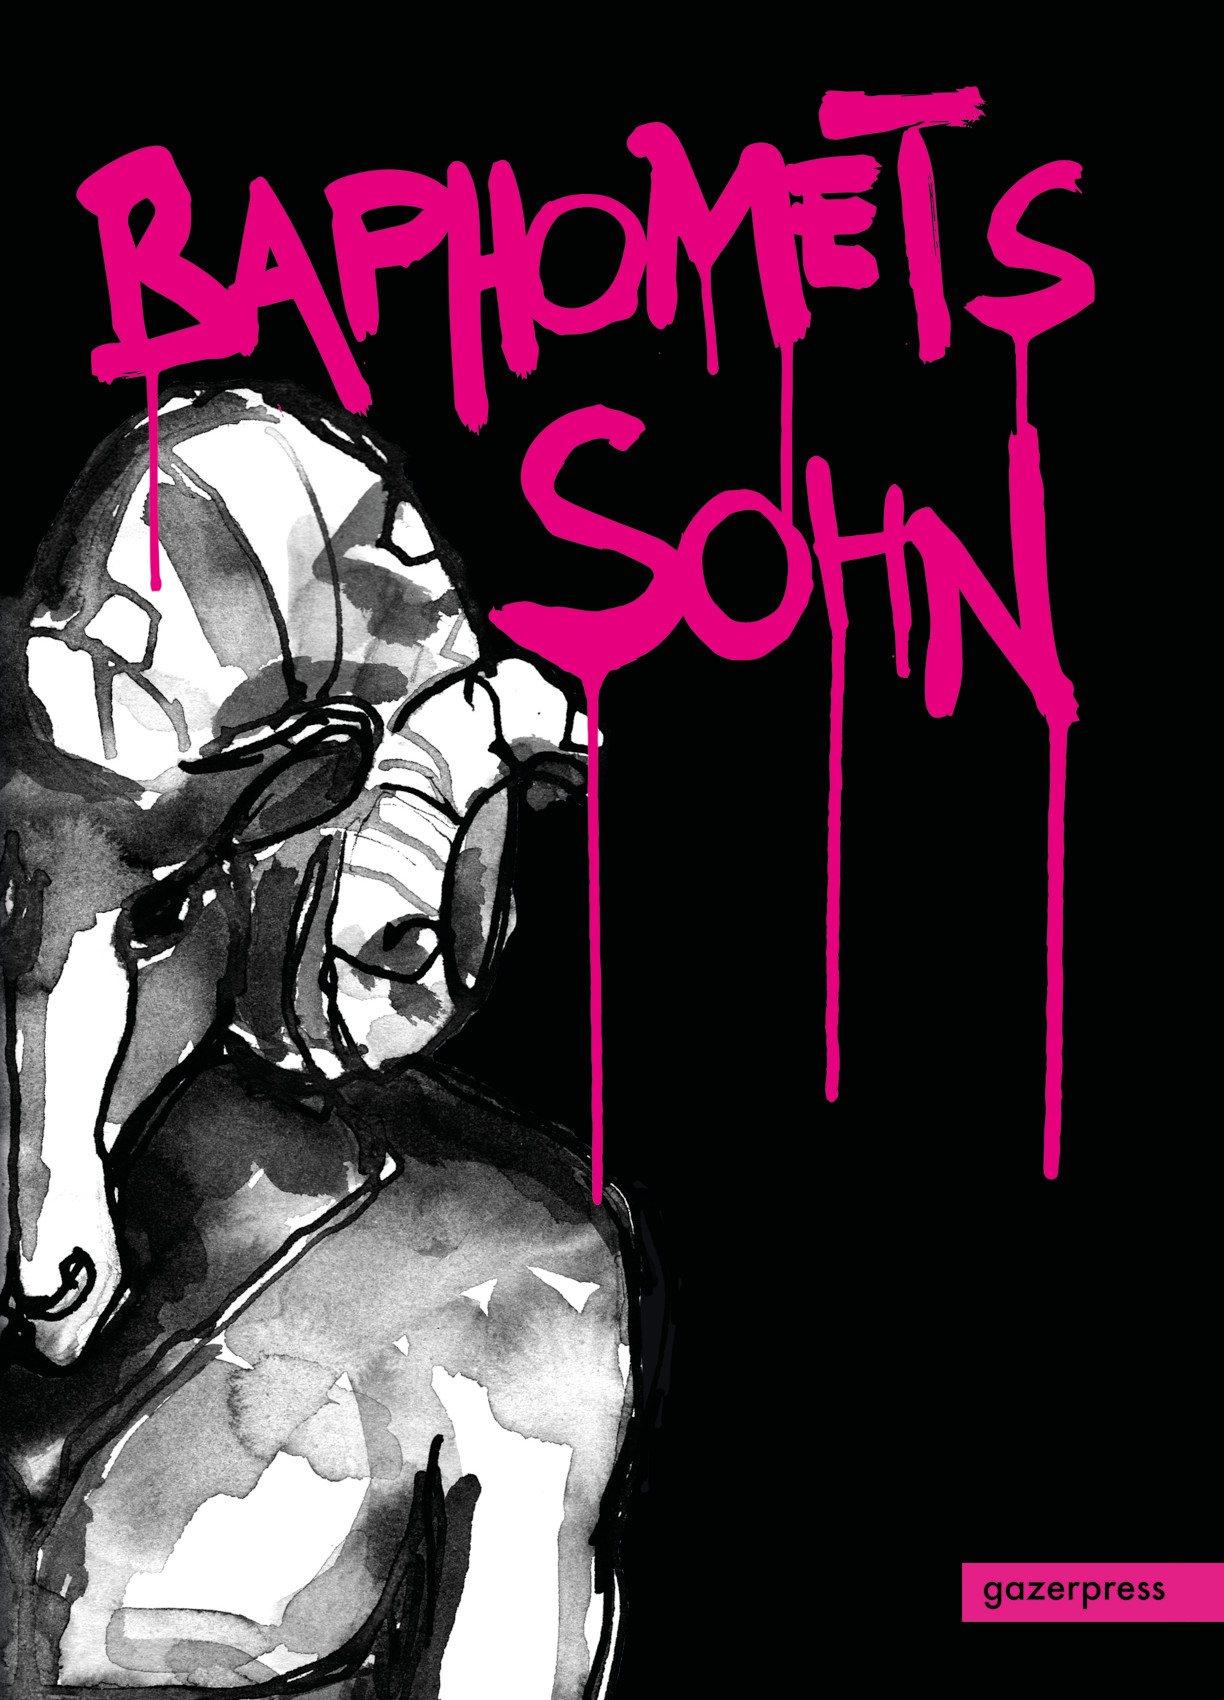 Baphomets Sohn, PDF